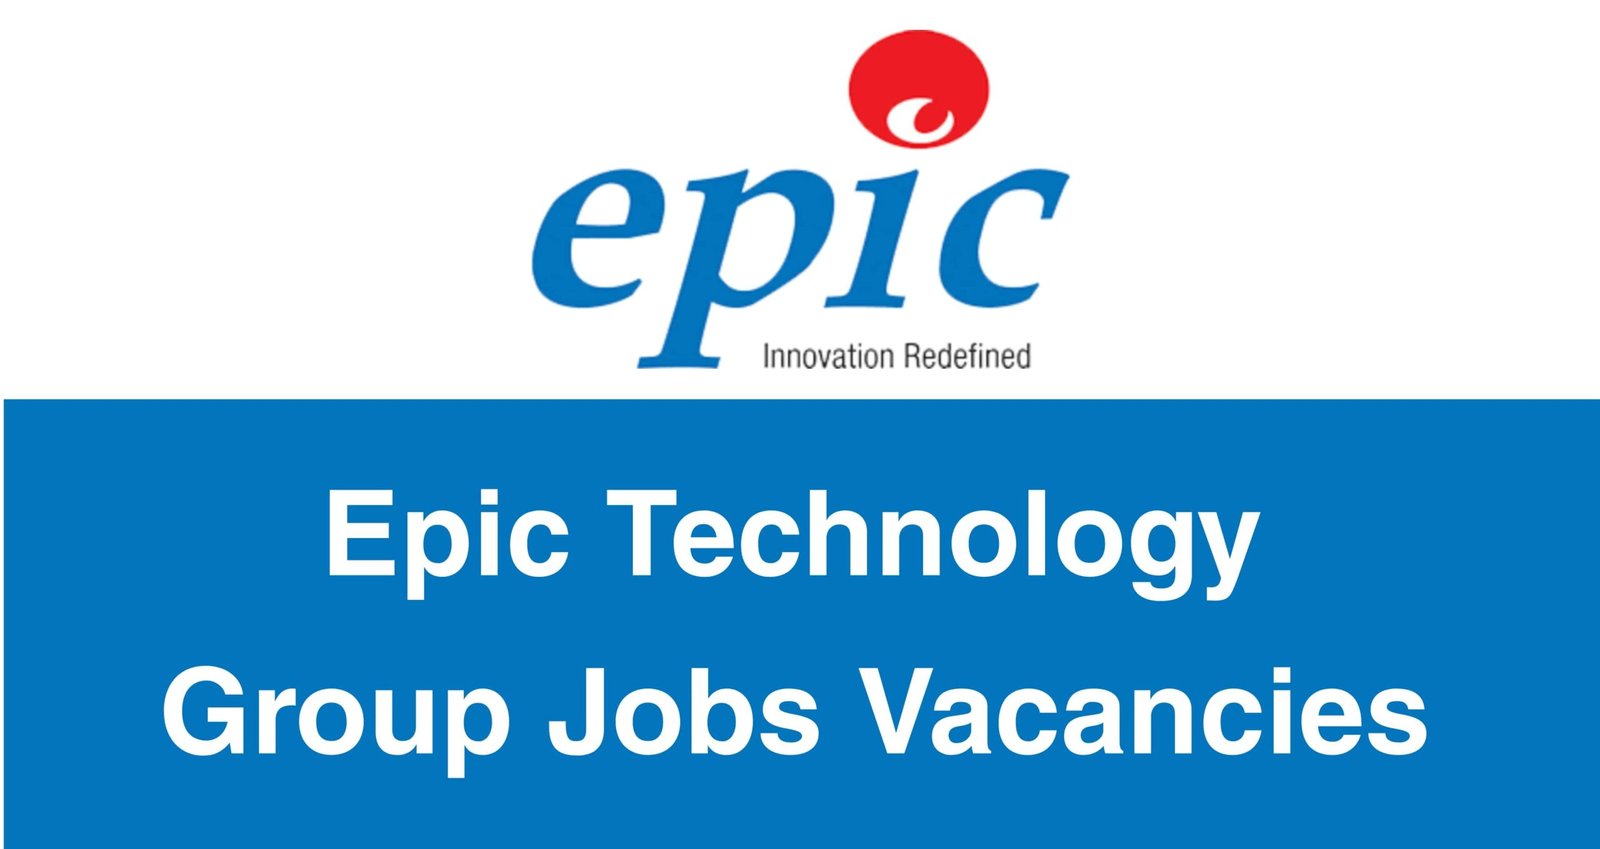 Epic Technology Group Jobs Vacancies